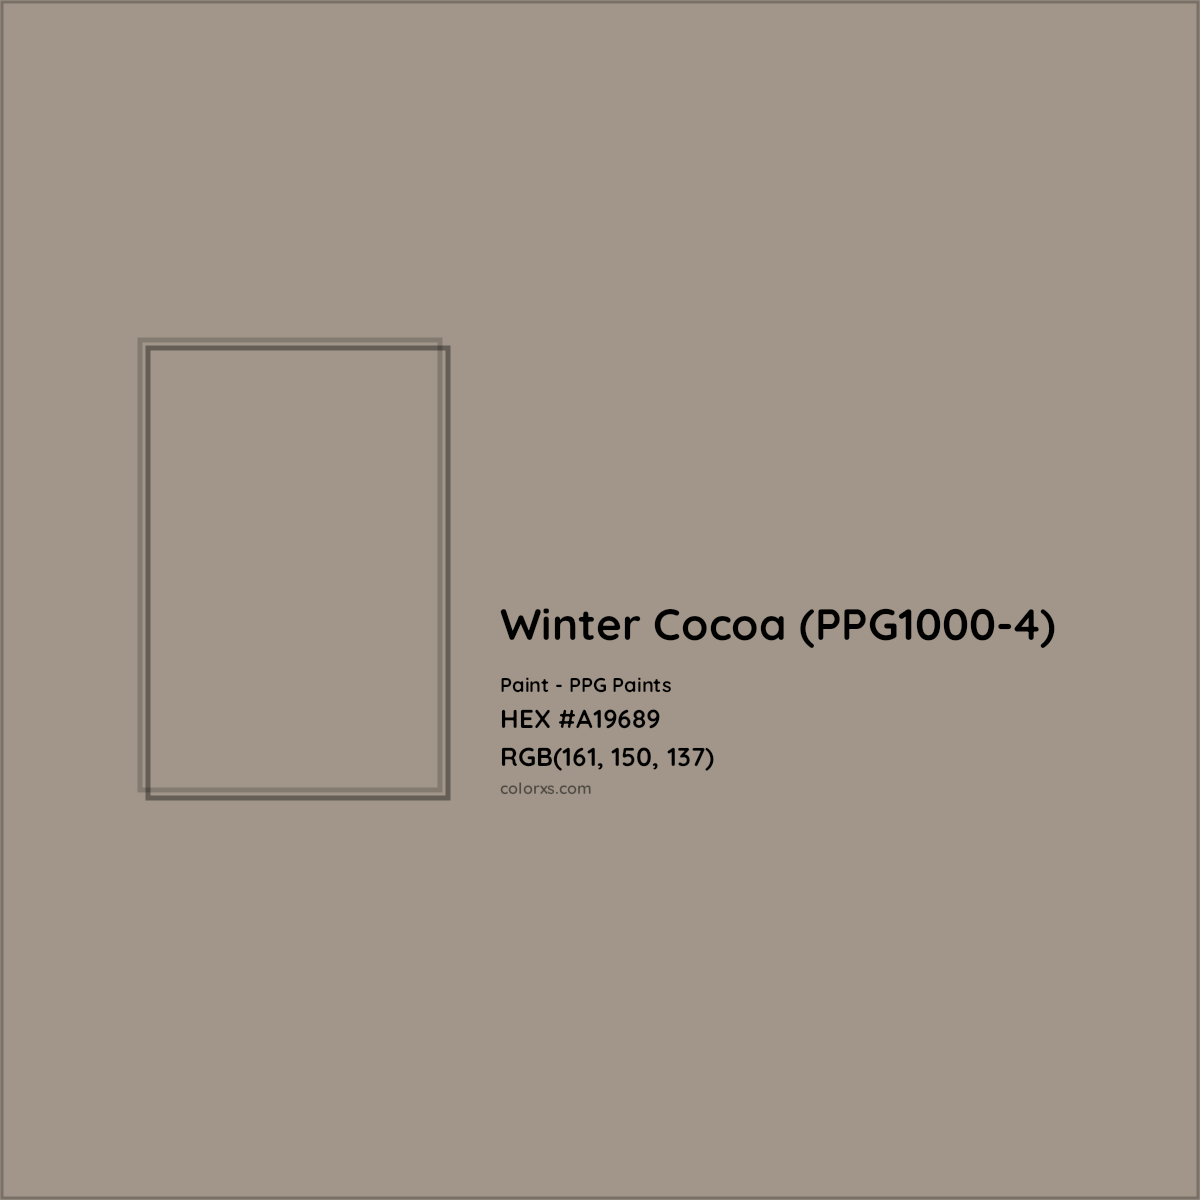 HEX #A19689 Winter Cocoa (PPG1000-4) Paint PPG Paints - Color Code